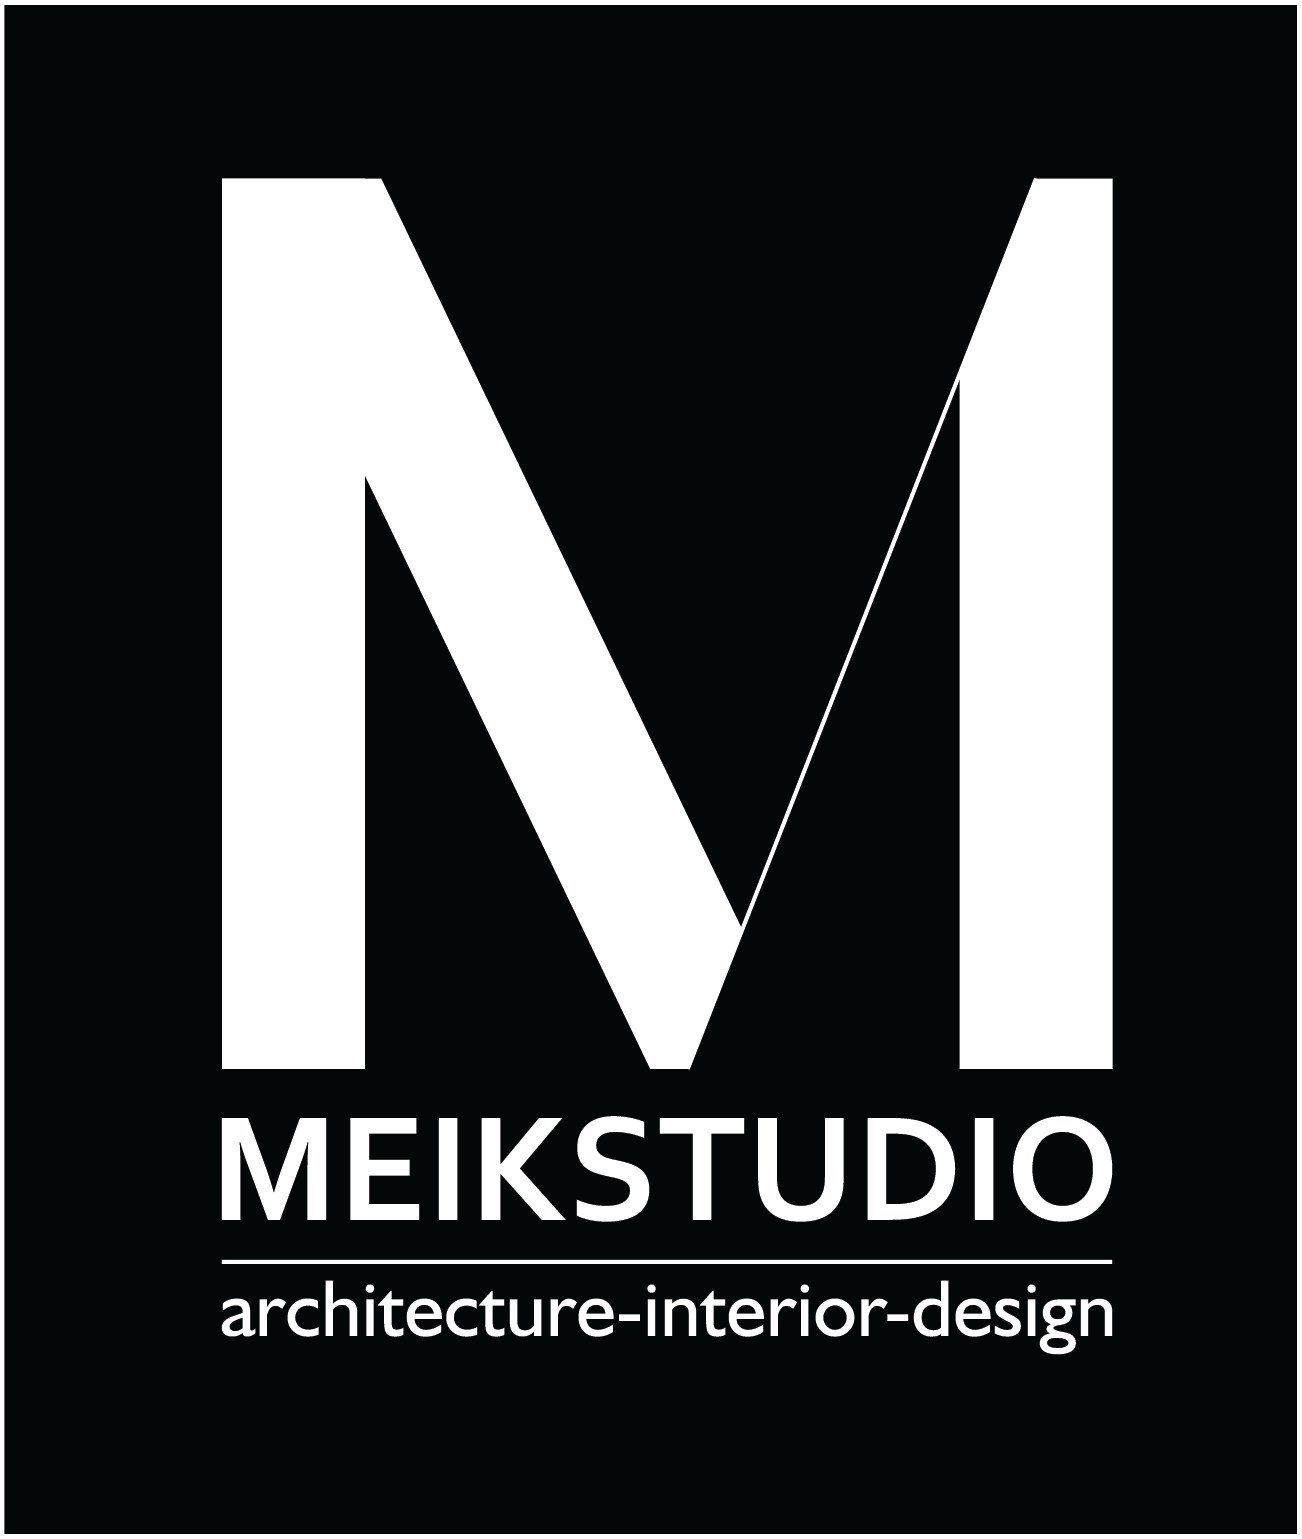 MEIKSTUDIO architecture-interior-design